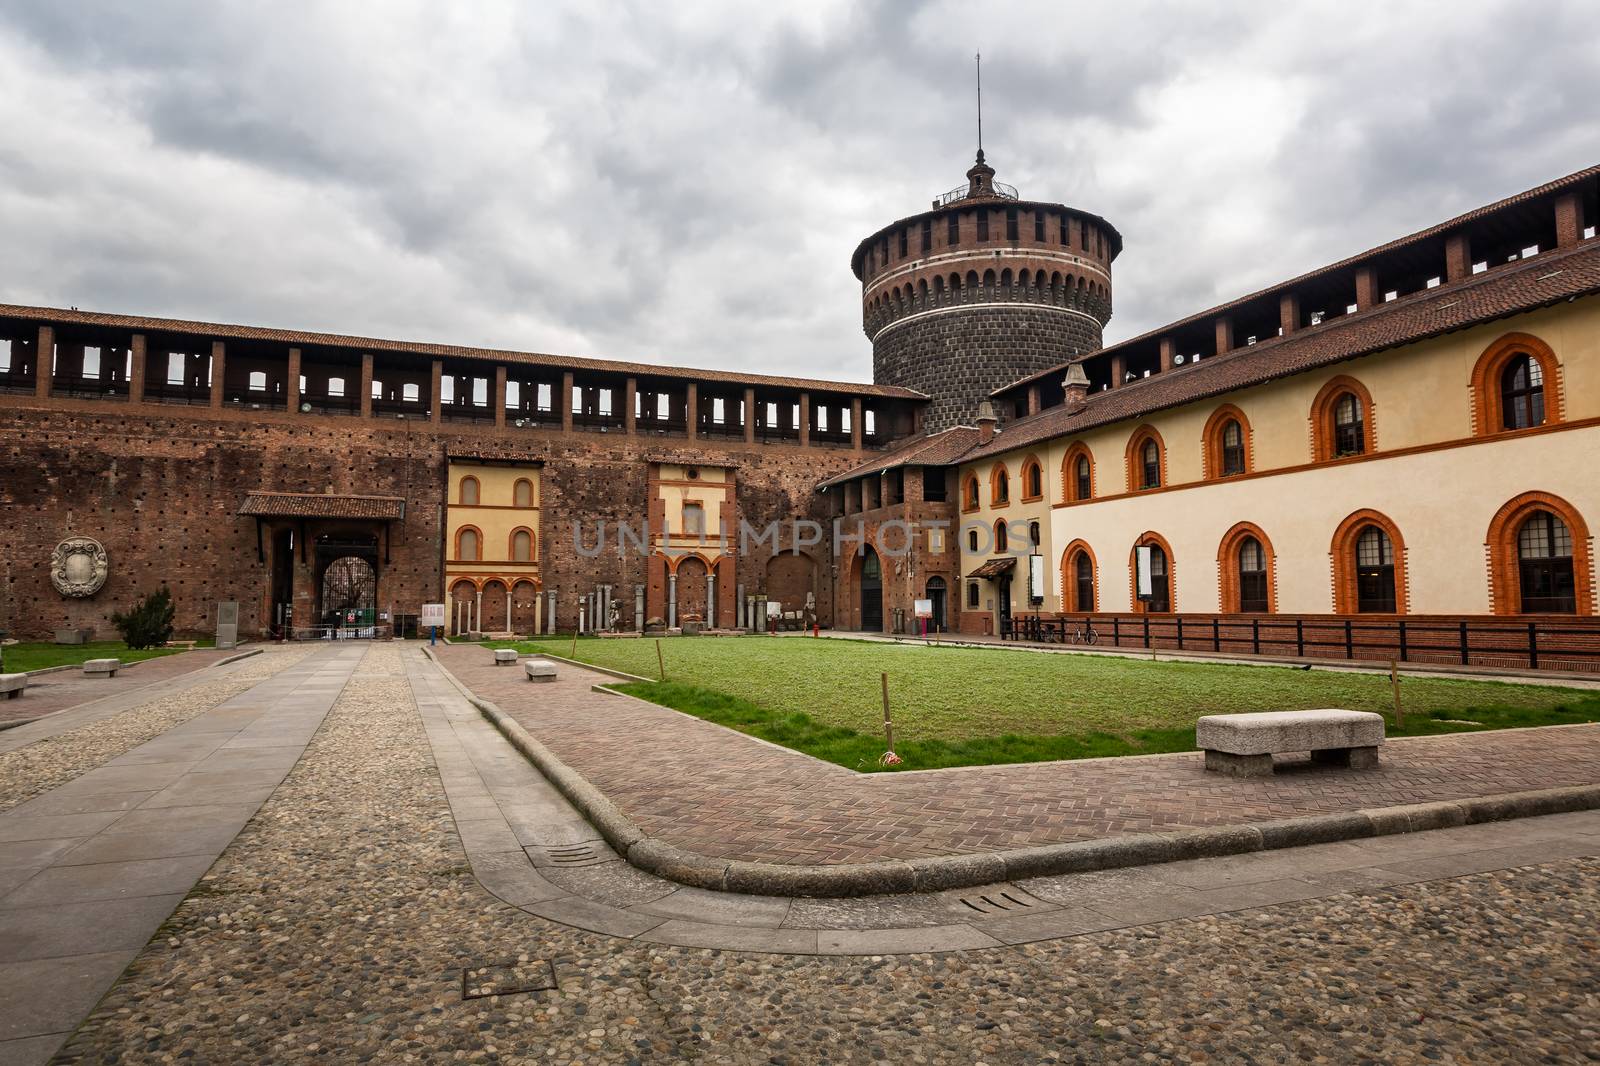 The Wall and Towers of Castello Sforzesco (Sforza Castle) in Milan, Italy